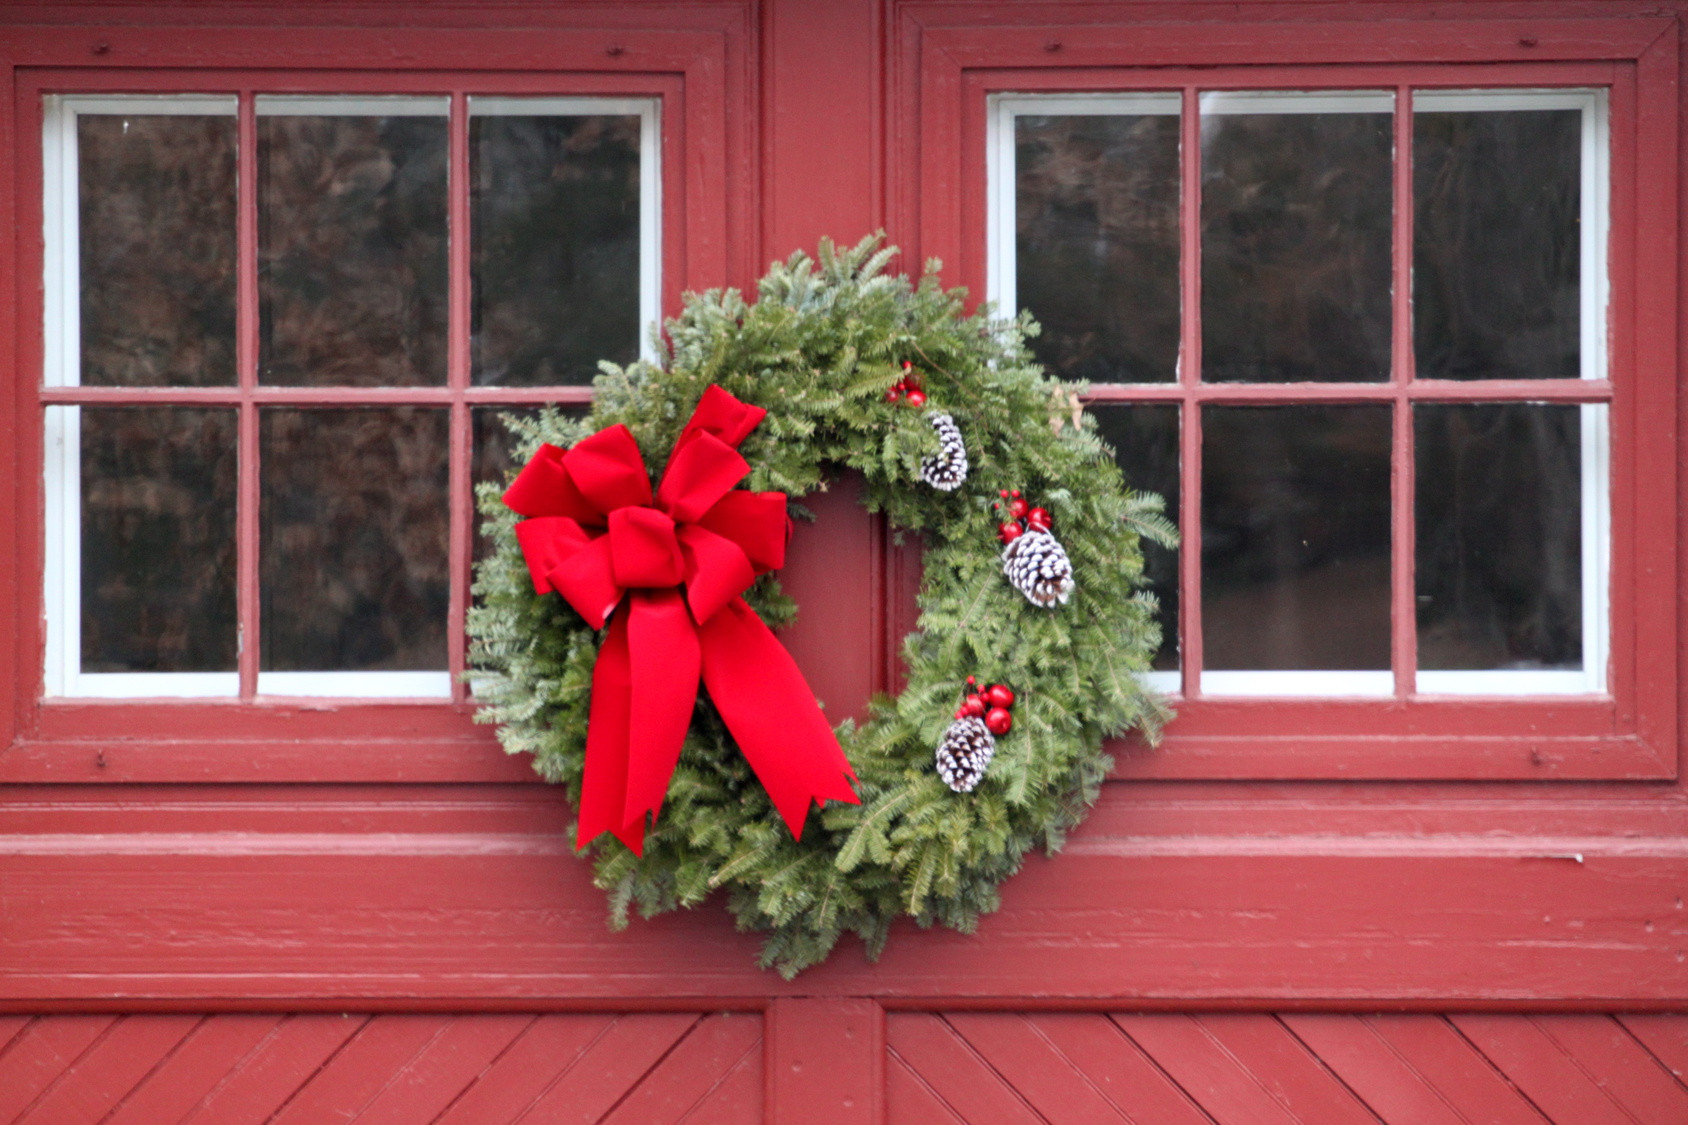 Garage Door Christmas Decorating Ideas
 Dressing Up Your Garage Door for the Holidays